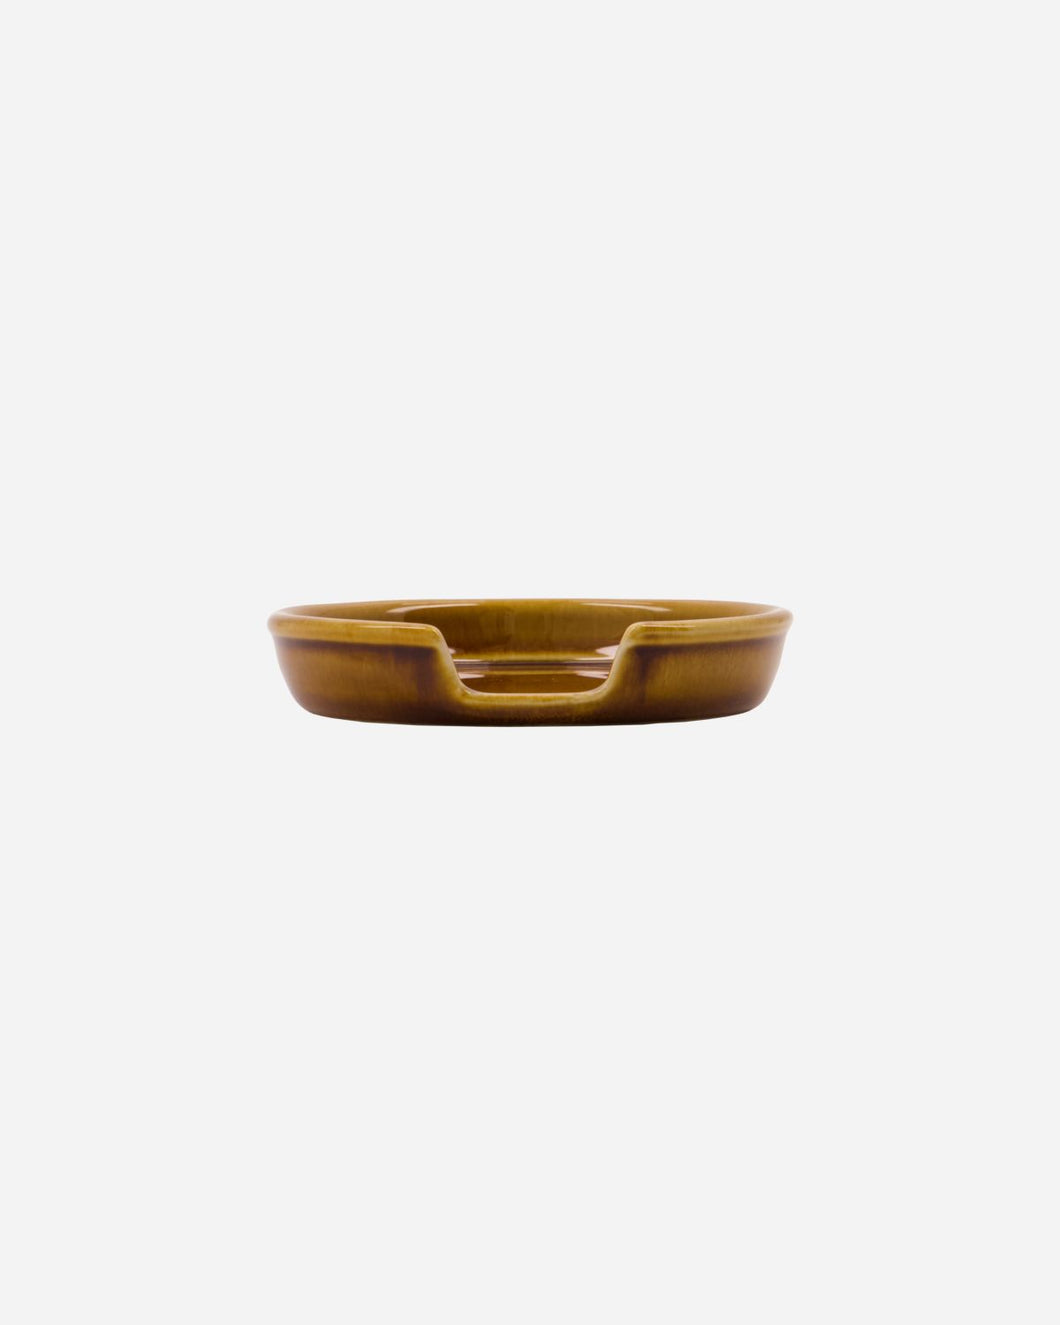 Ceramic Spoon Rest / Mocha